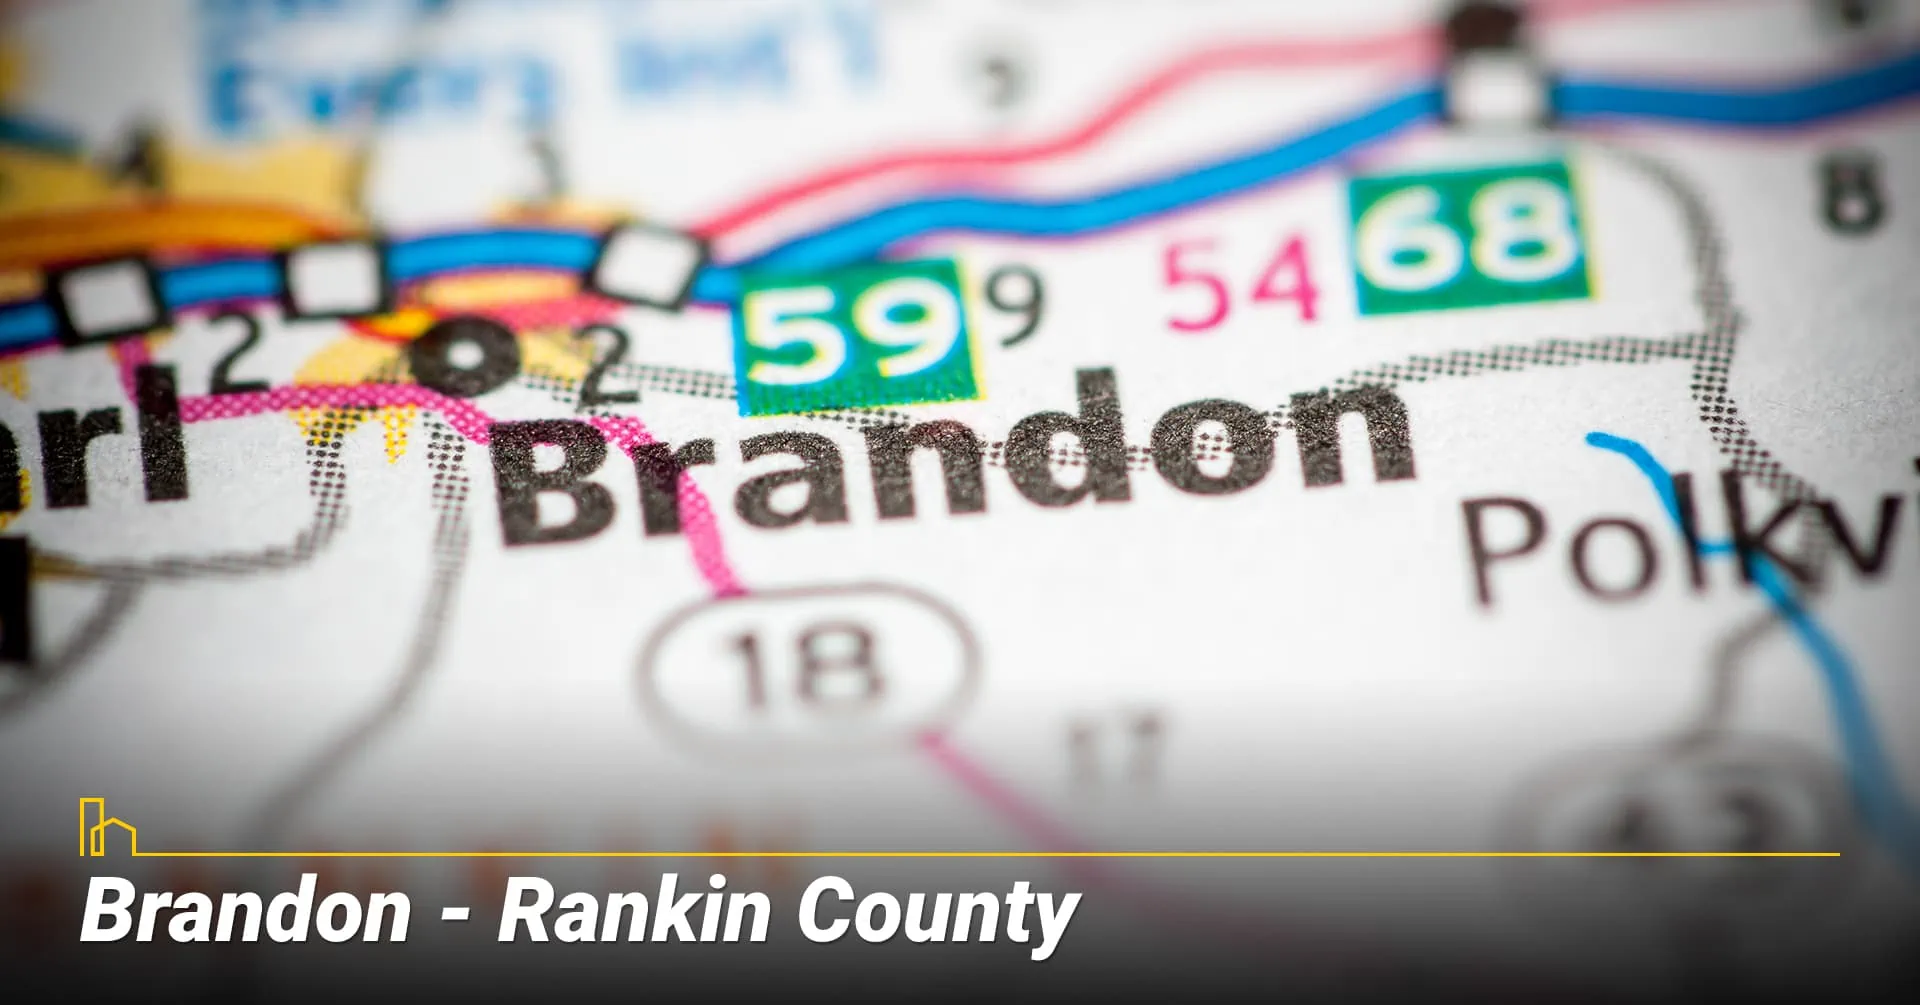 Brandon - Rankin County 